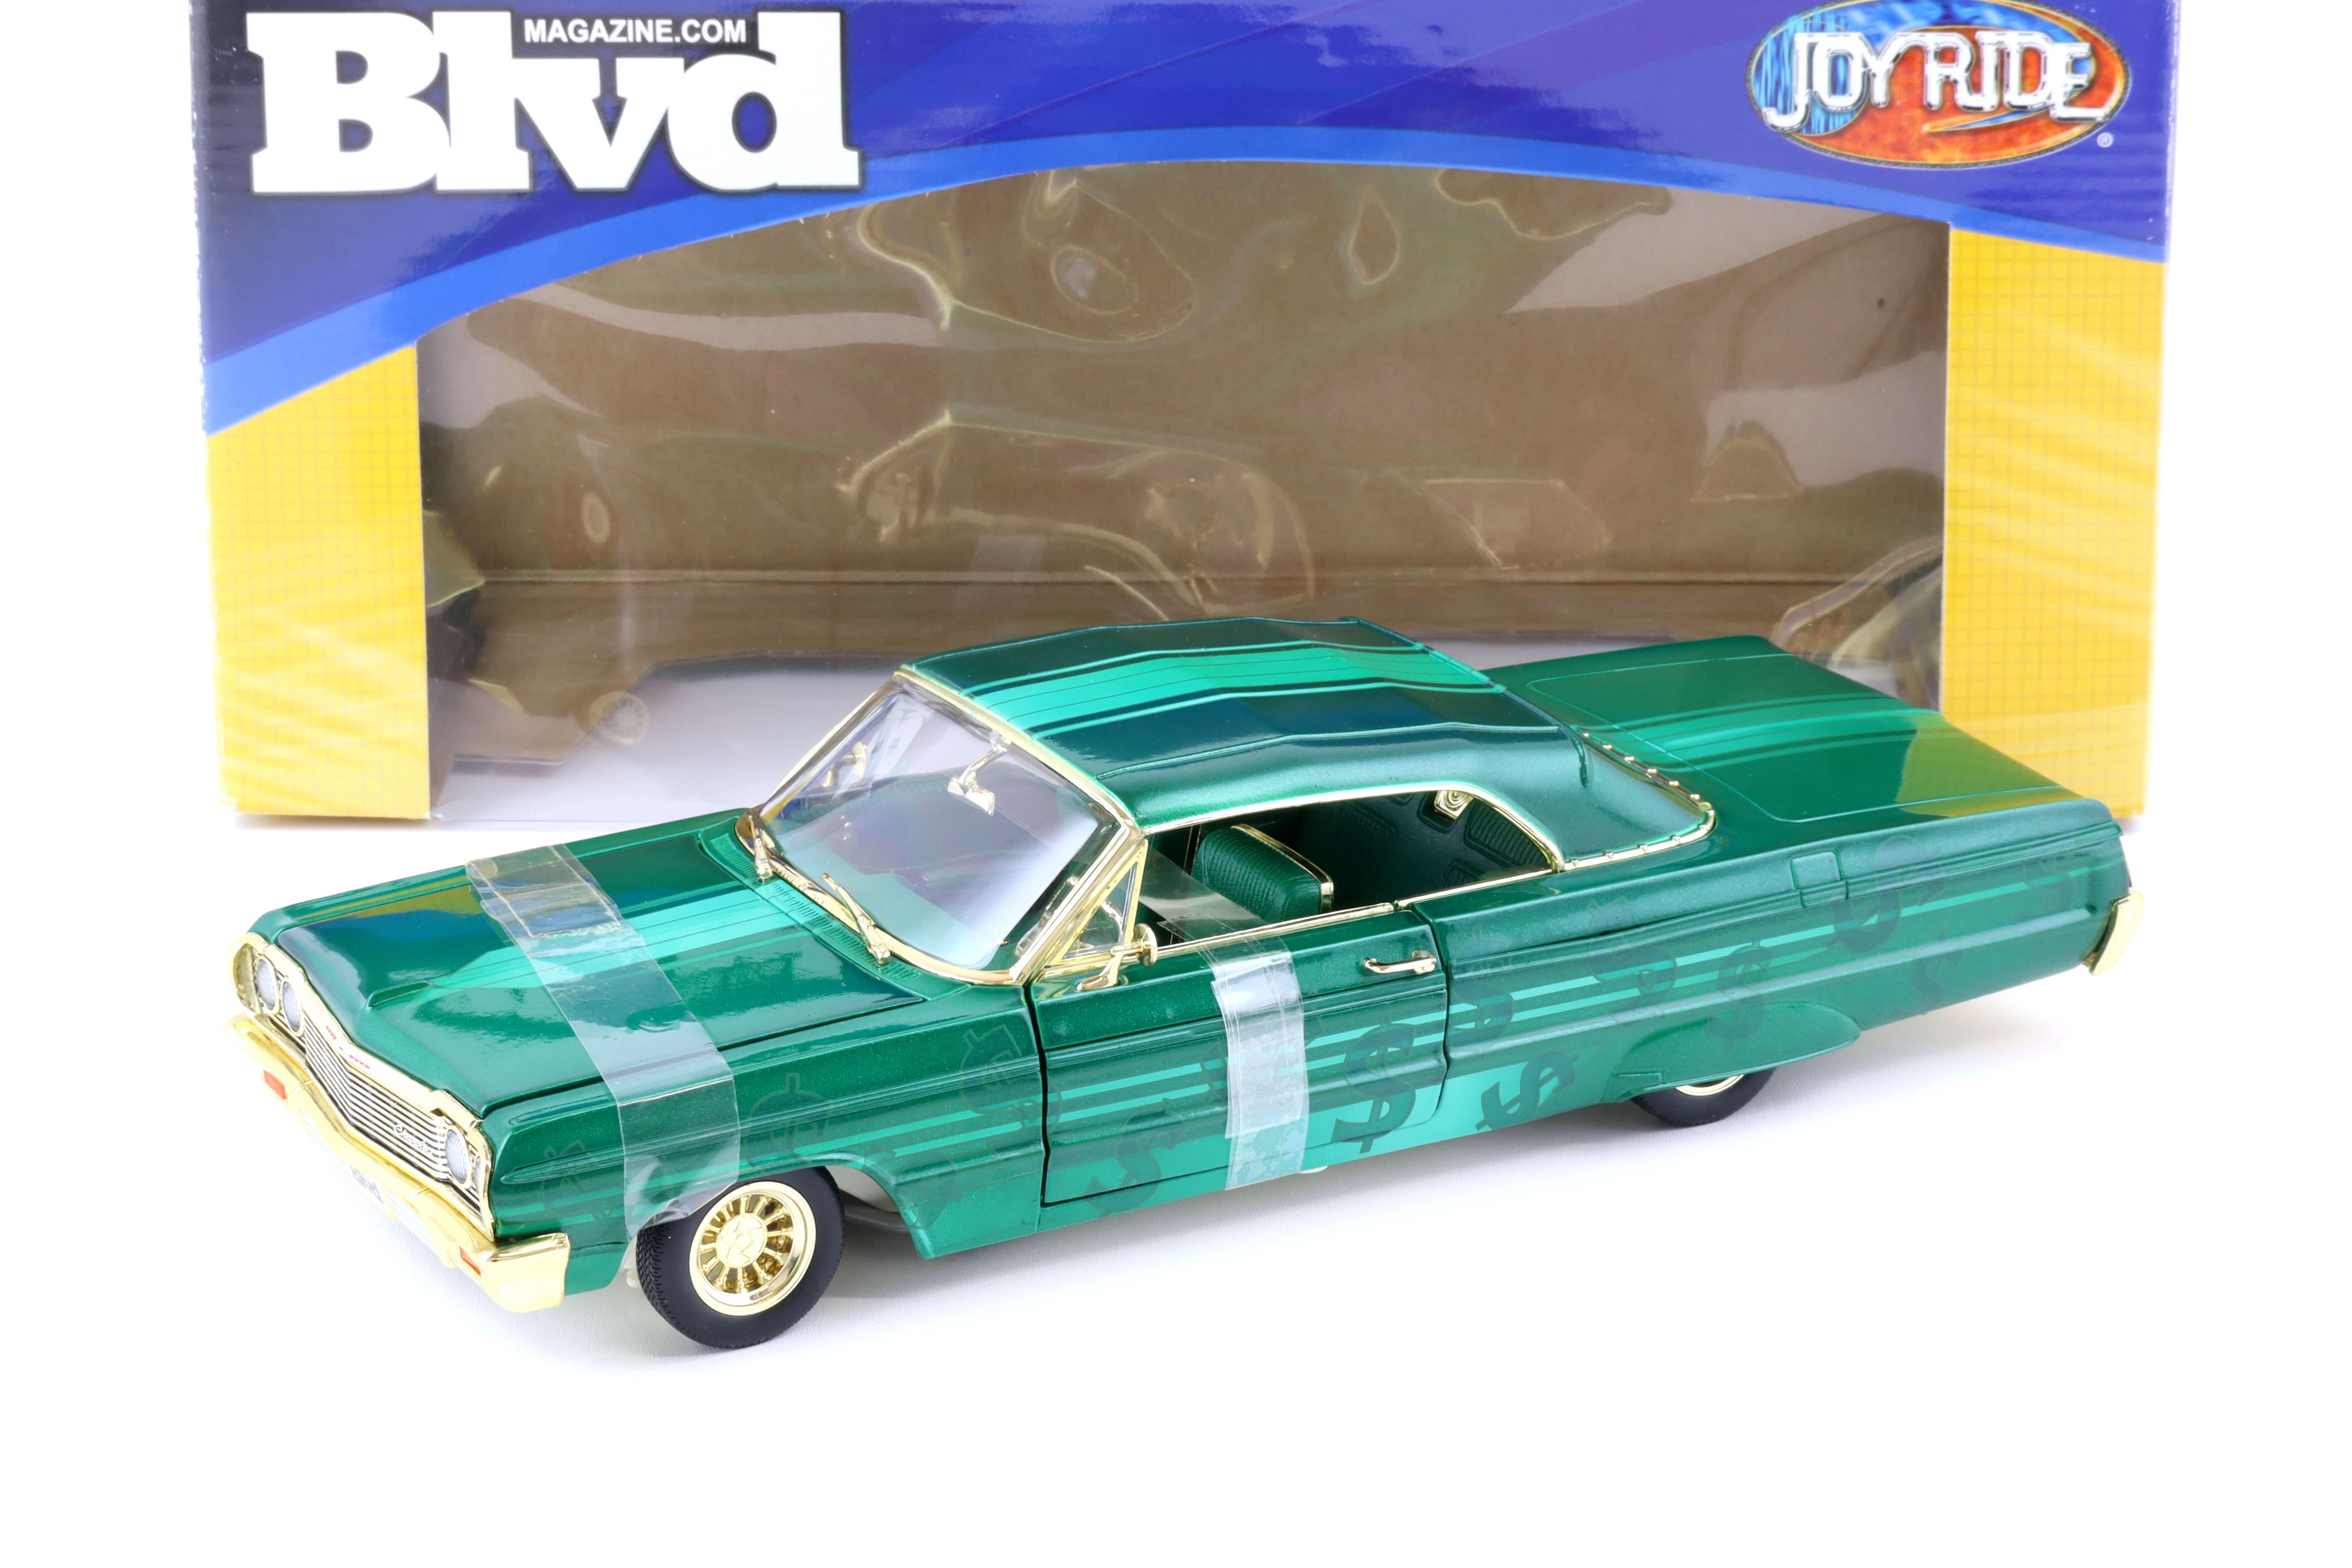 1:18 ERTL Joyride 1964 Chevrolet Impala Lowrider Blvd Magazine green / gold